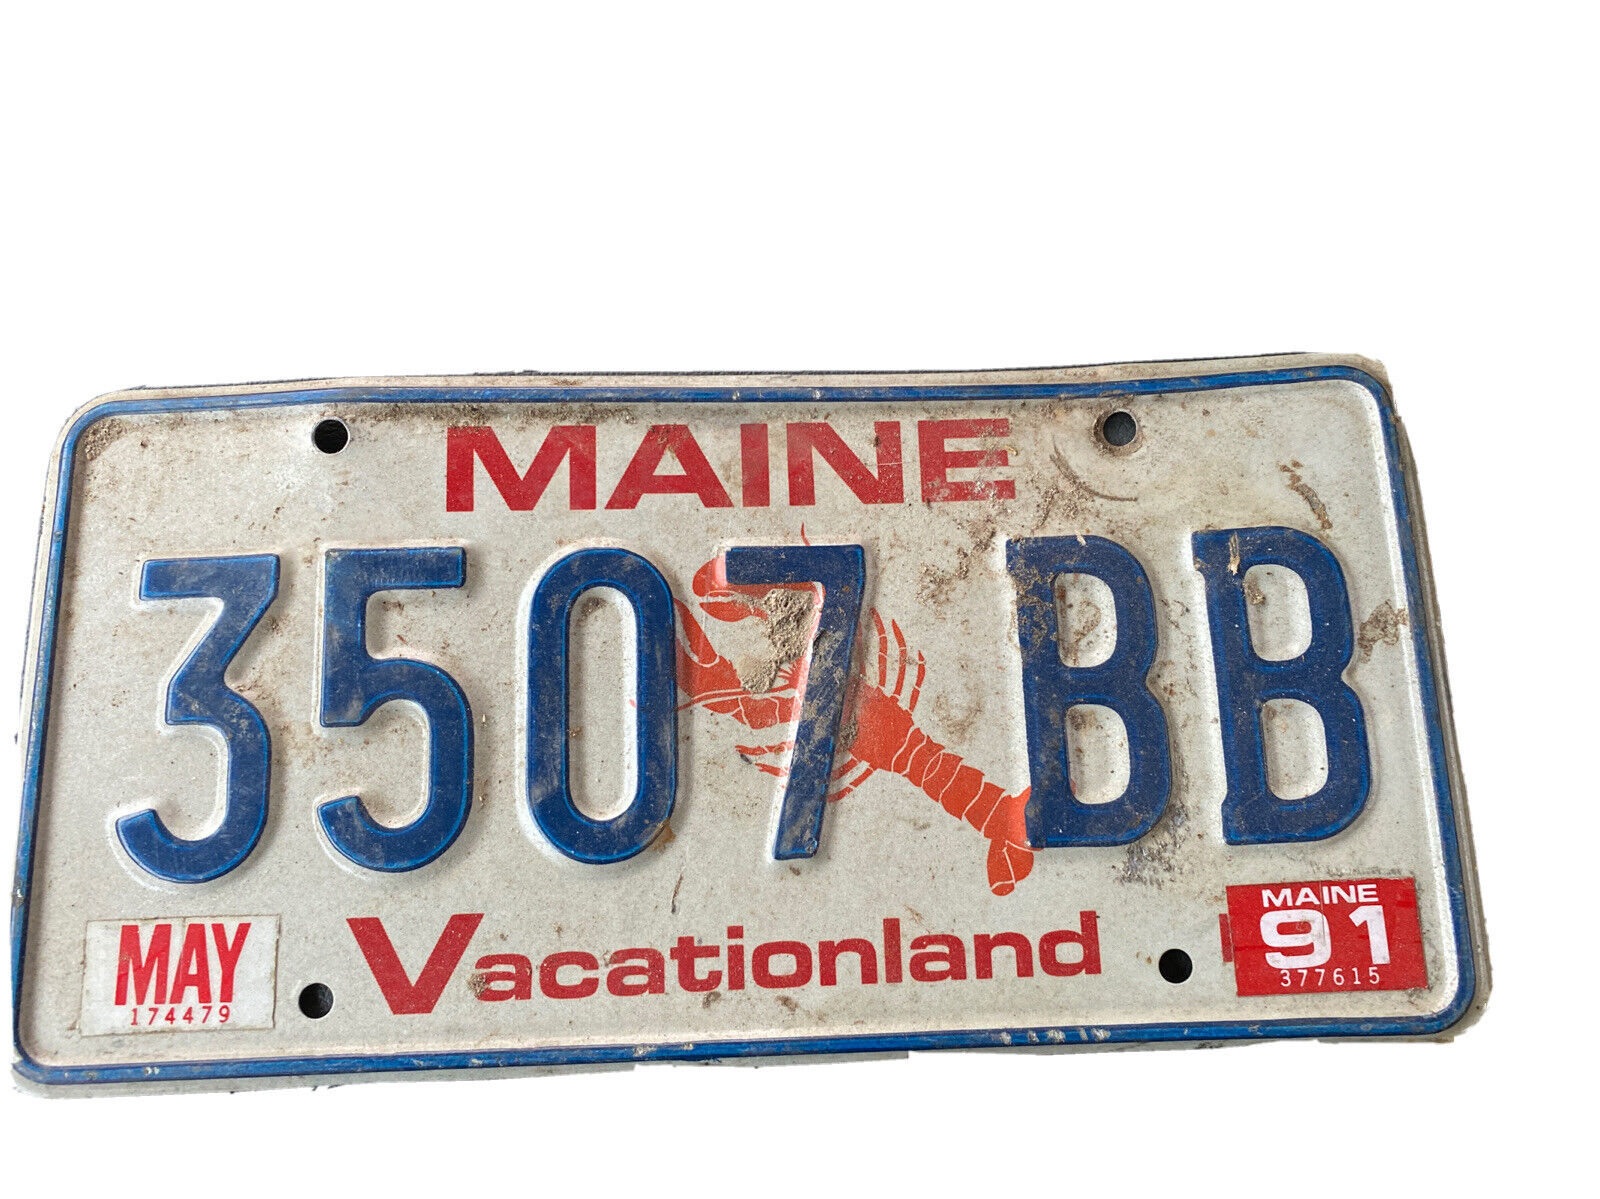 Vintage 1991 maine license plate 3507 BB  VACATIONLAND